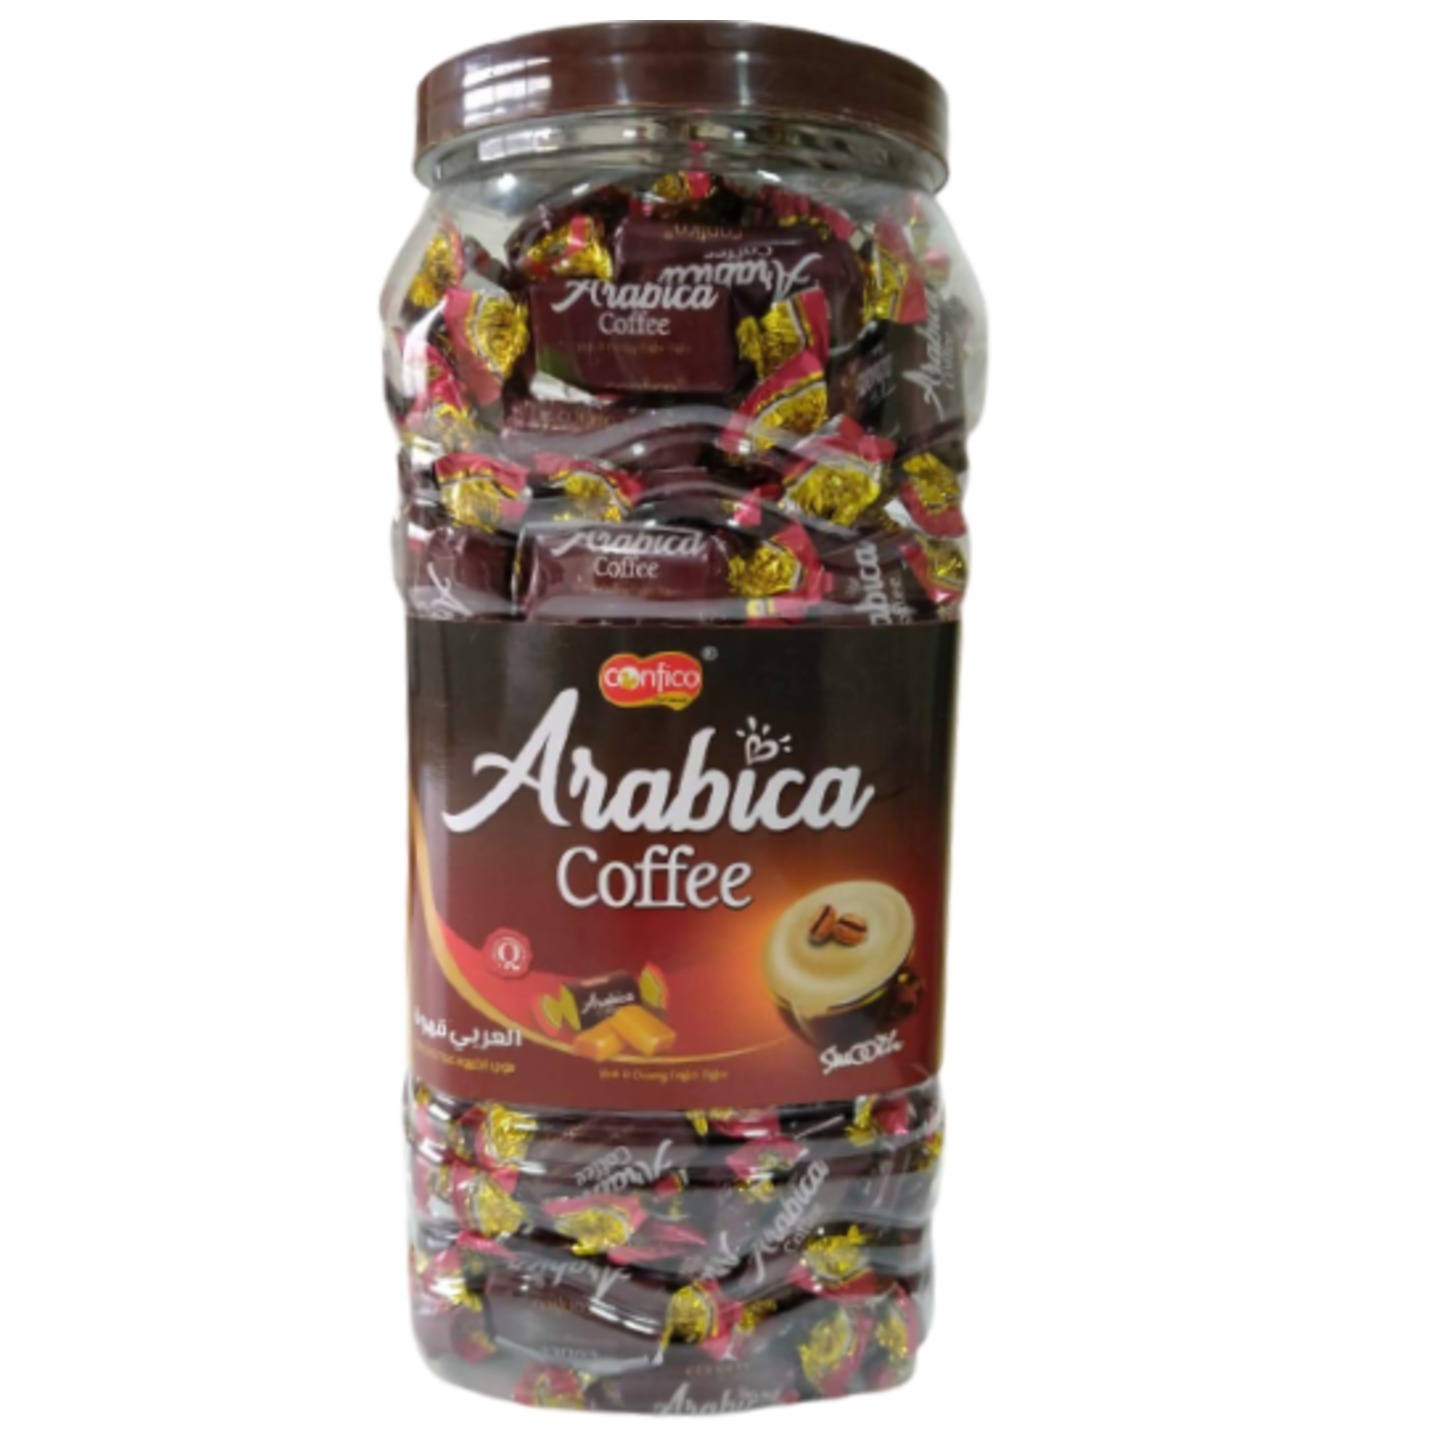 Confico Arabica Coffee Toffee Jar Mrp 100